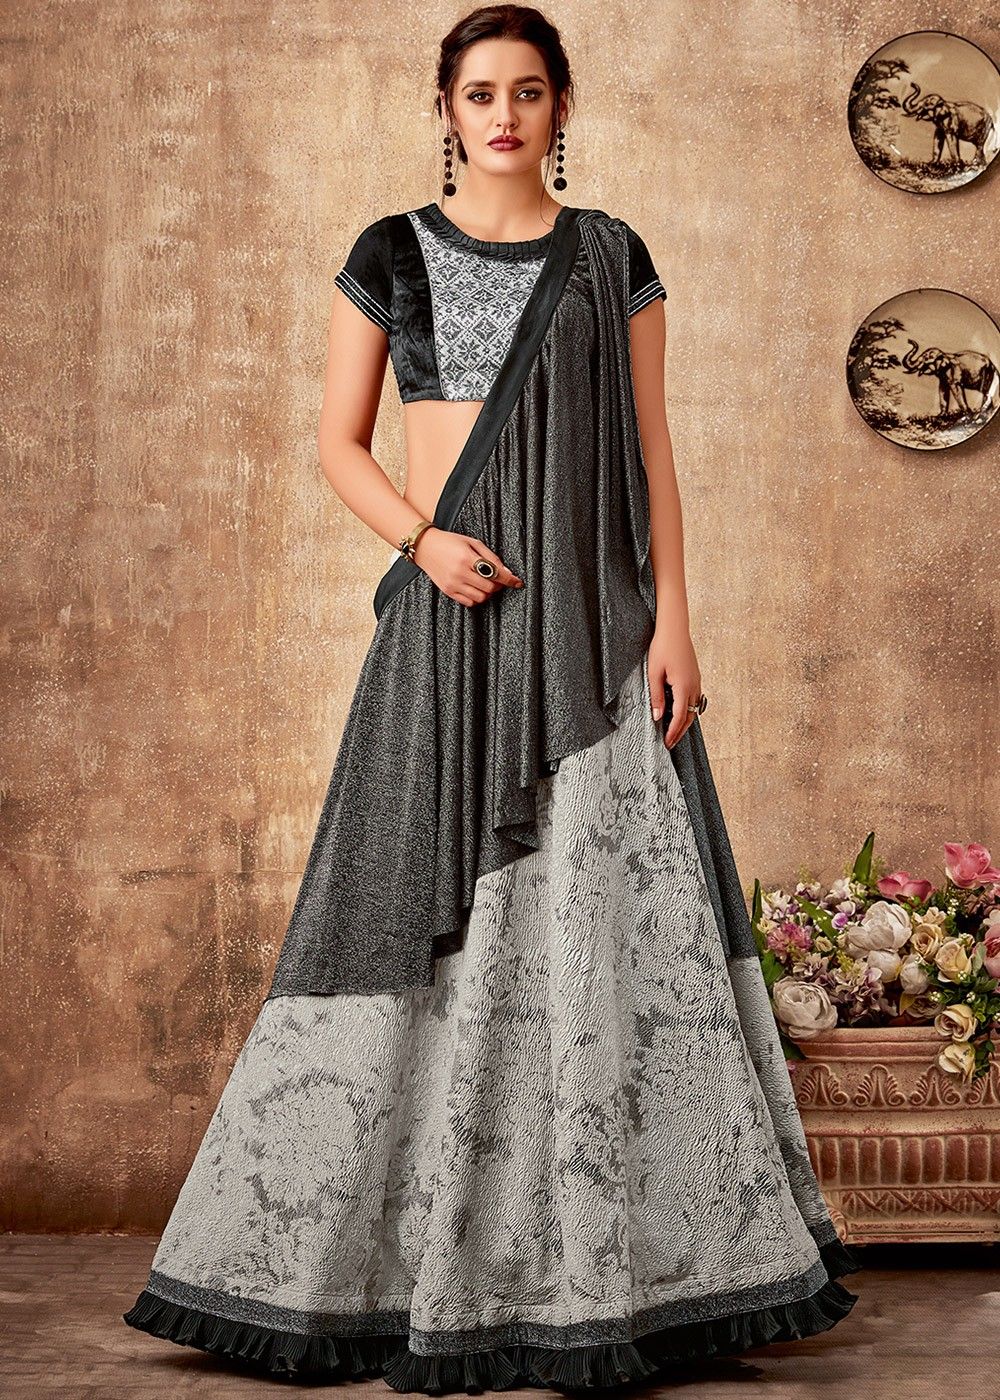 Lehenga Style Saree at Rs 5000 | Chandni Chowk | Delhi | ID: 6374354262-cacanhphuclong.com.vn